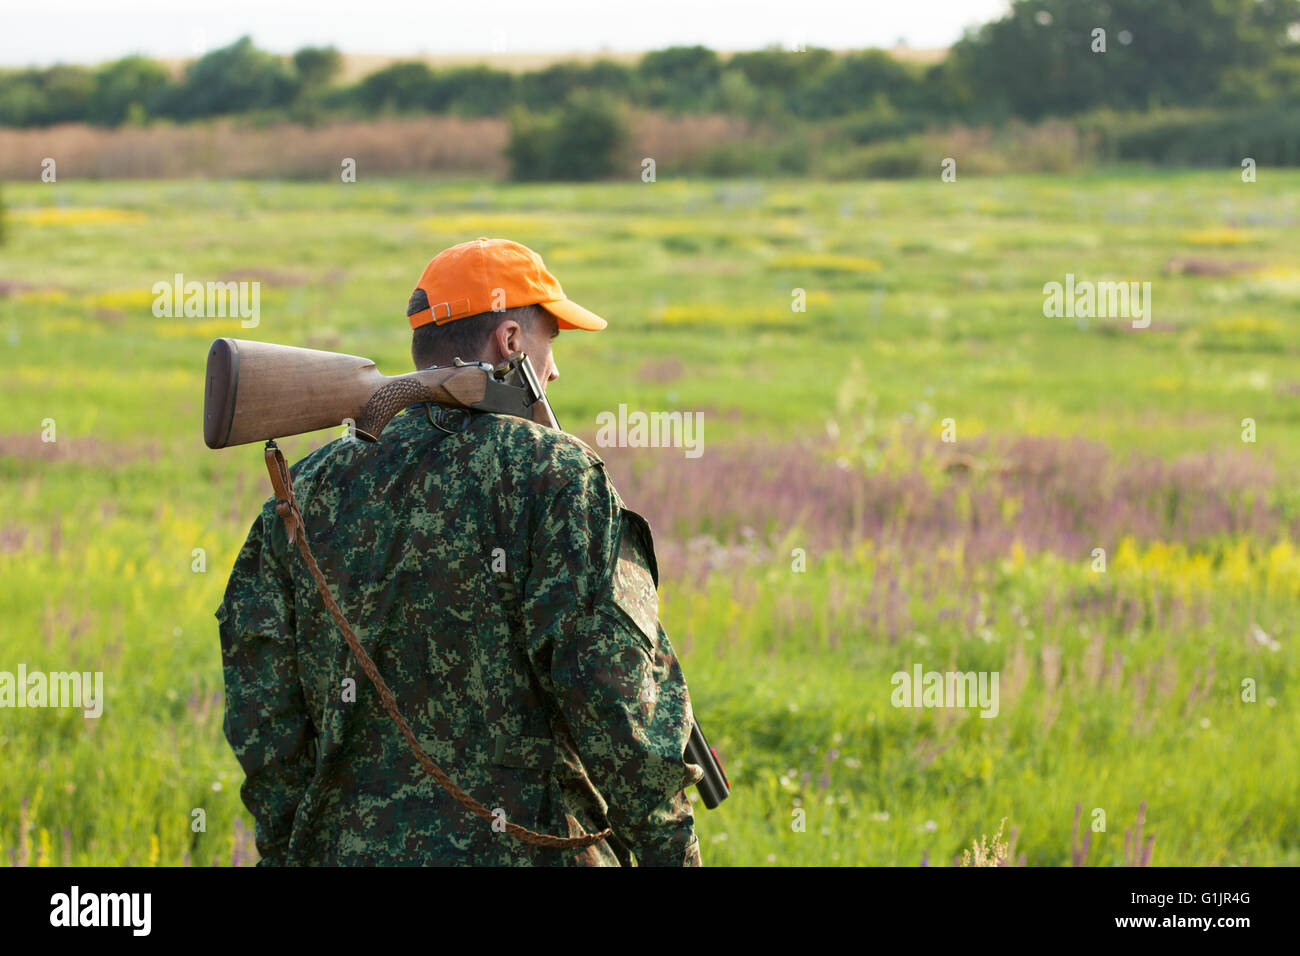 Männliche Jäger Blick auf Feld Jagd Saison quial Stockfoto